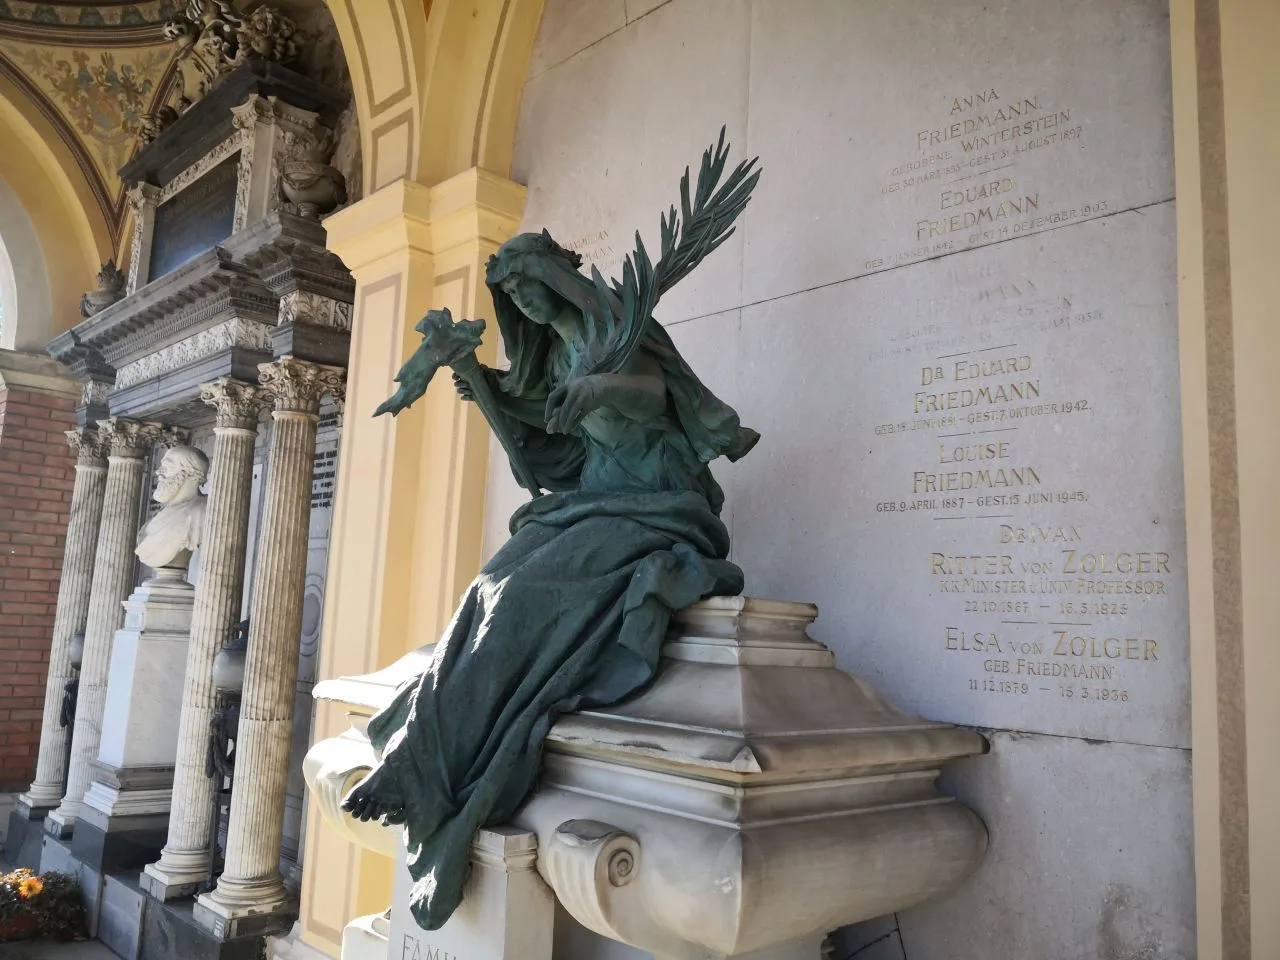 Beyond Death: The Vienna Central Cemetery as a Unique Cultural Venue